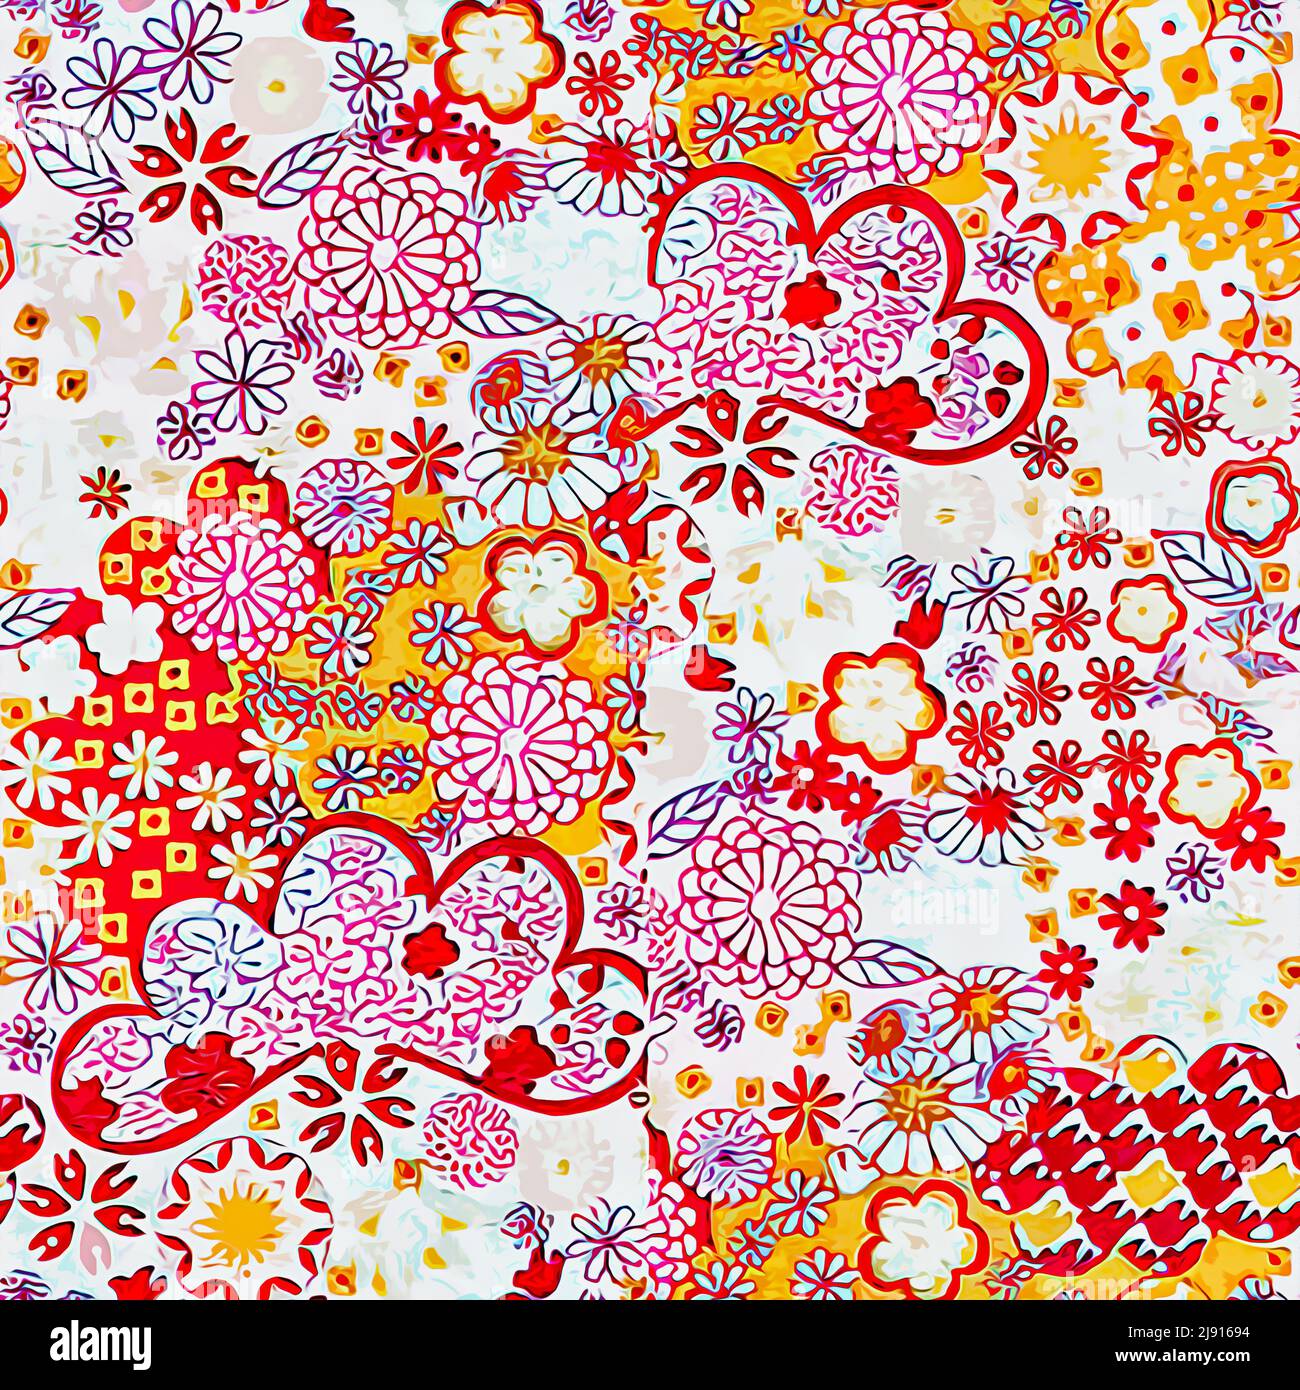 Textile and wallpaper patterns. A printable digital illustration work ...